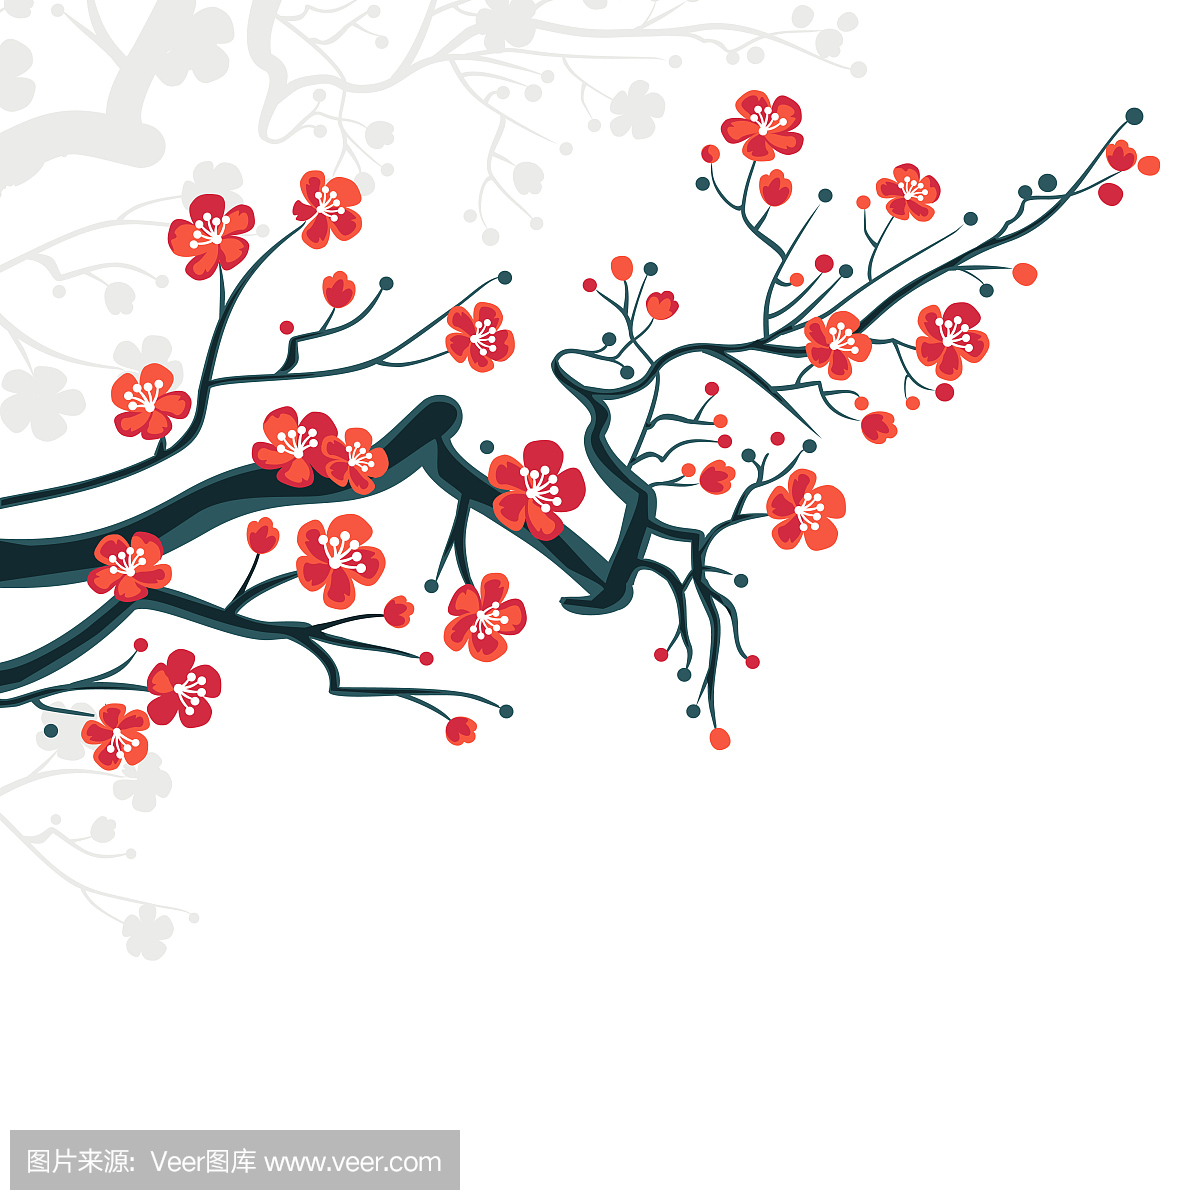 Сherry blossoms background - spring japanes